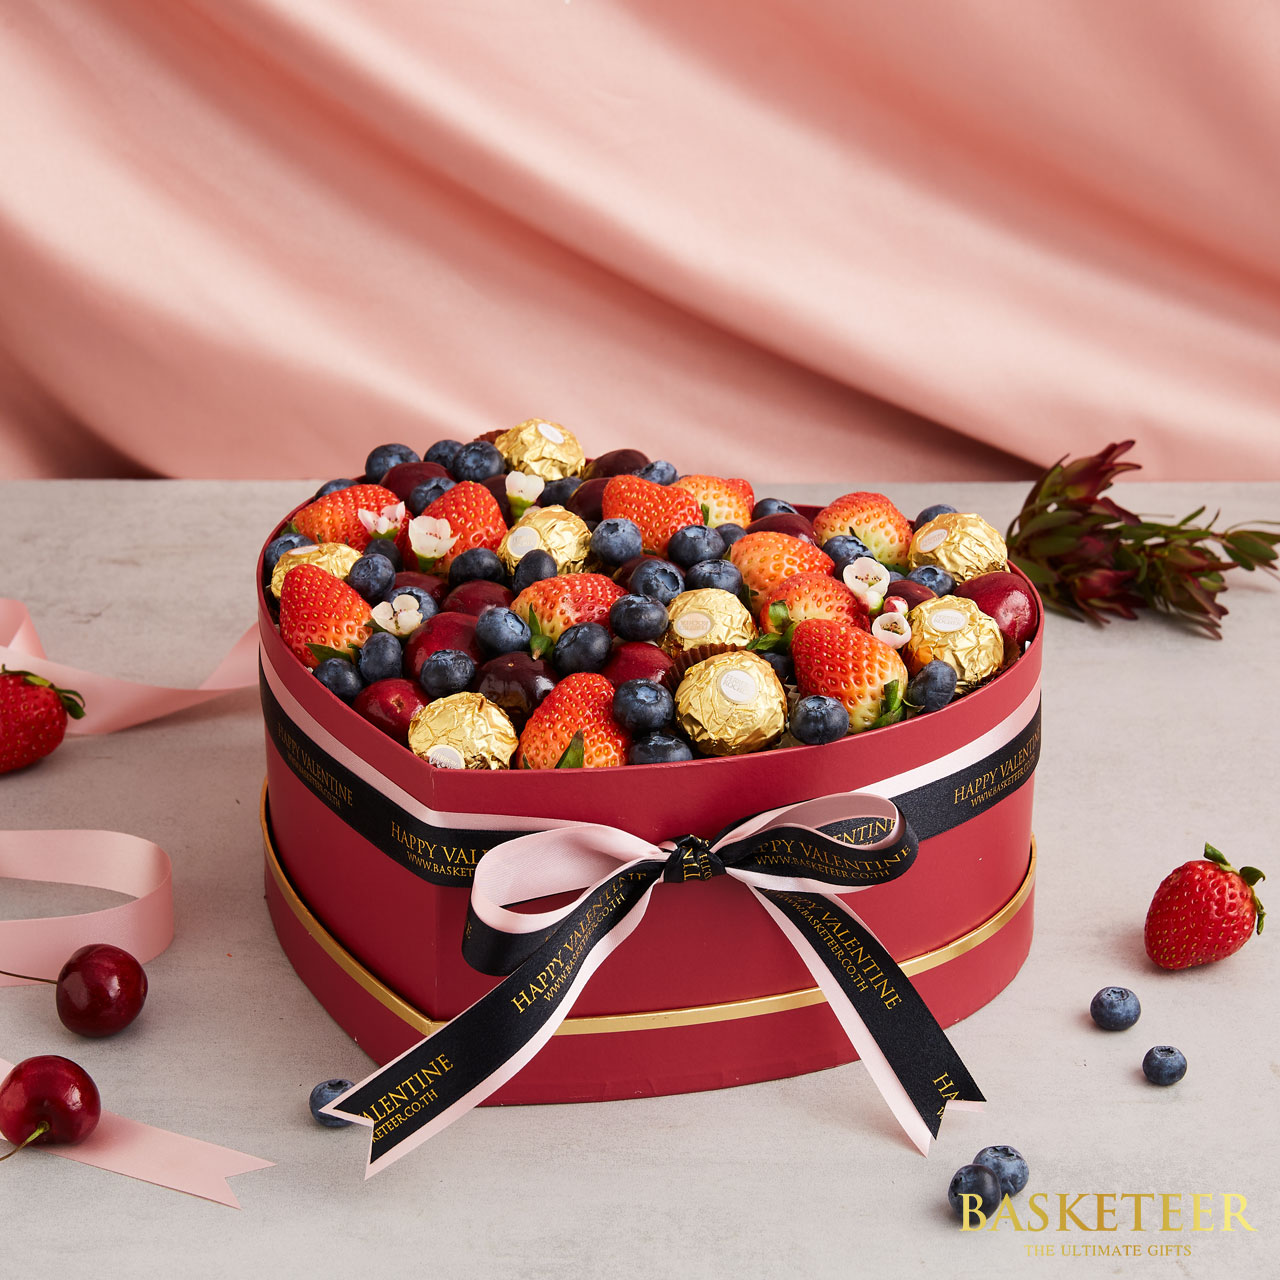 Mixed Berry & Chocolate Gift Box